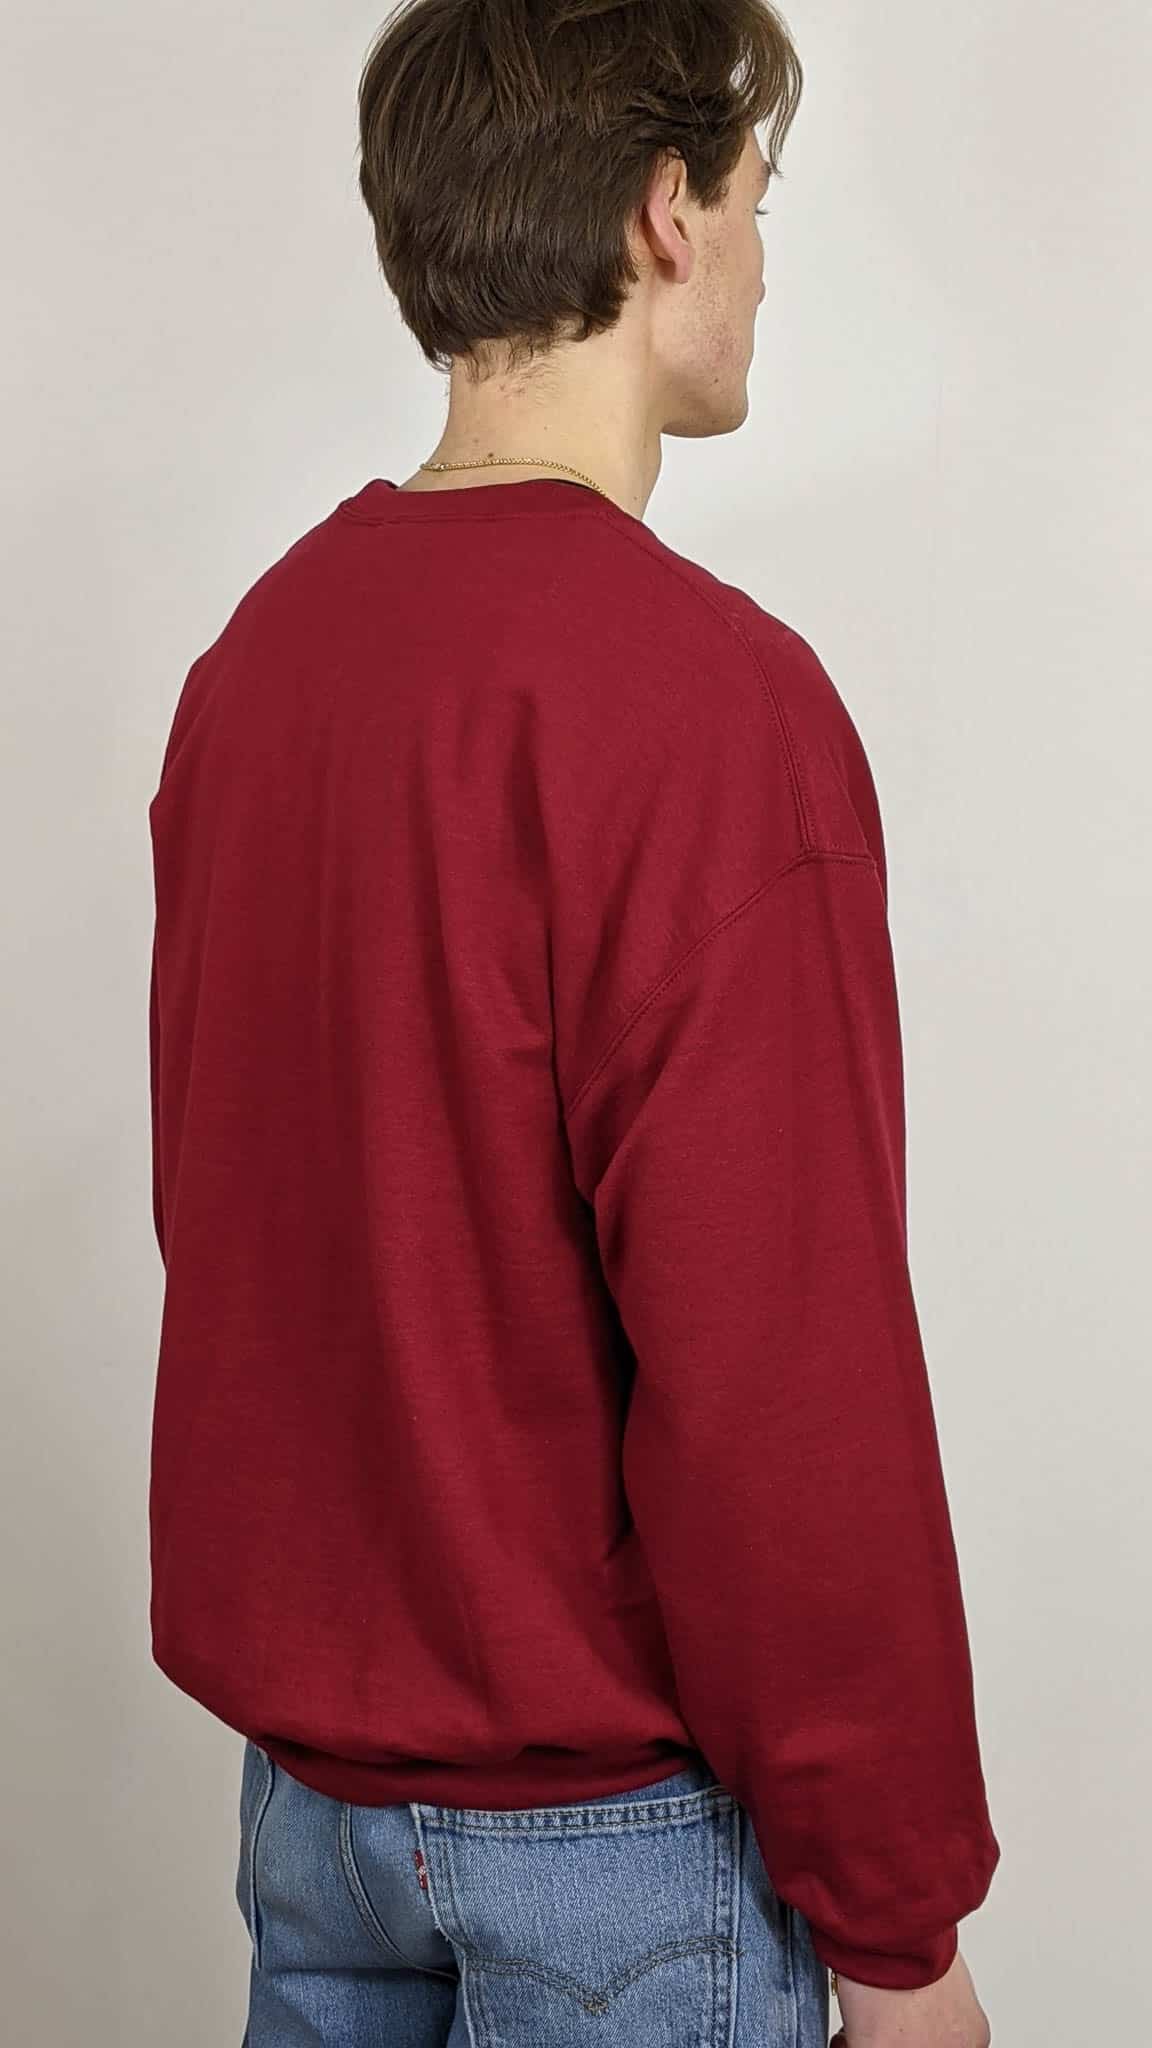 Cardinal Red Gildan Sweatshirt